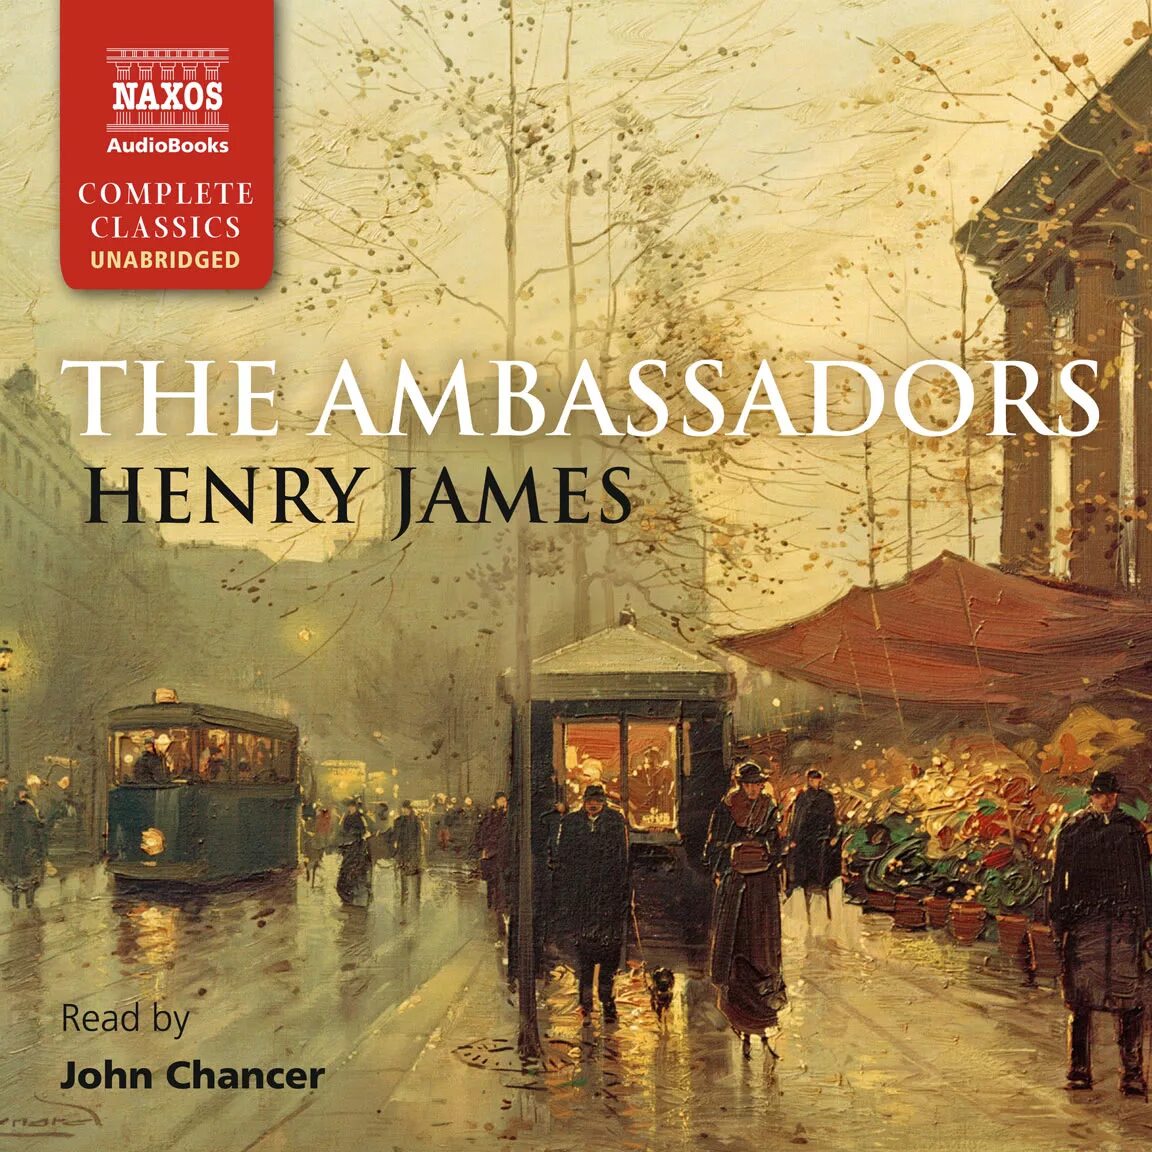 Аудиокнига посол. Henry James "the Ambassadors". Ambassador обложка.